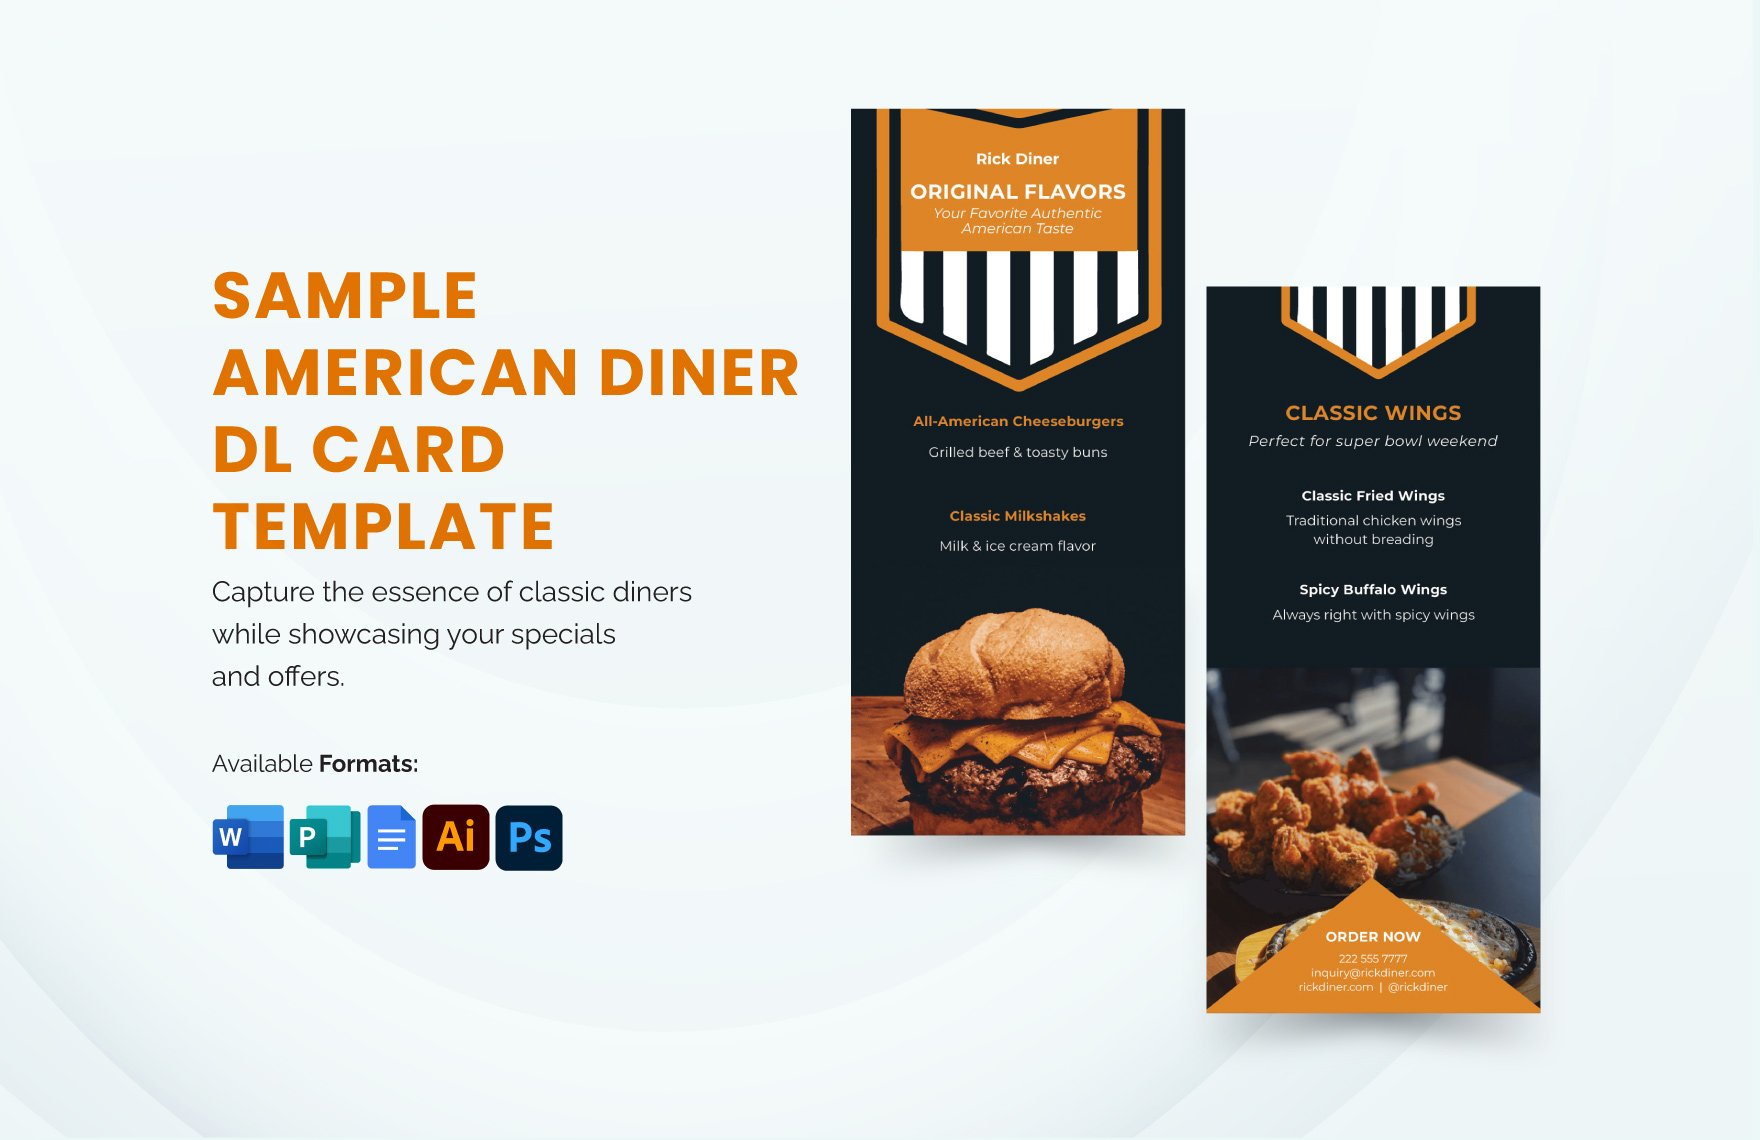 Sample American Diner DL Card Template